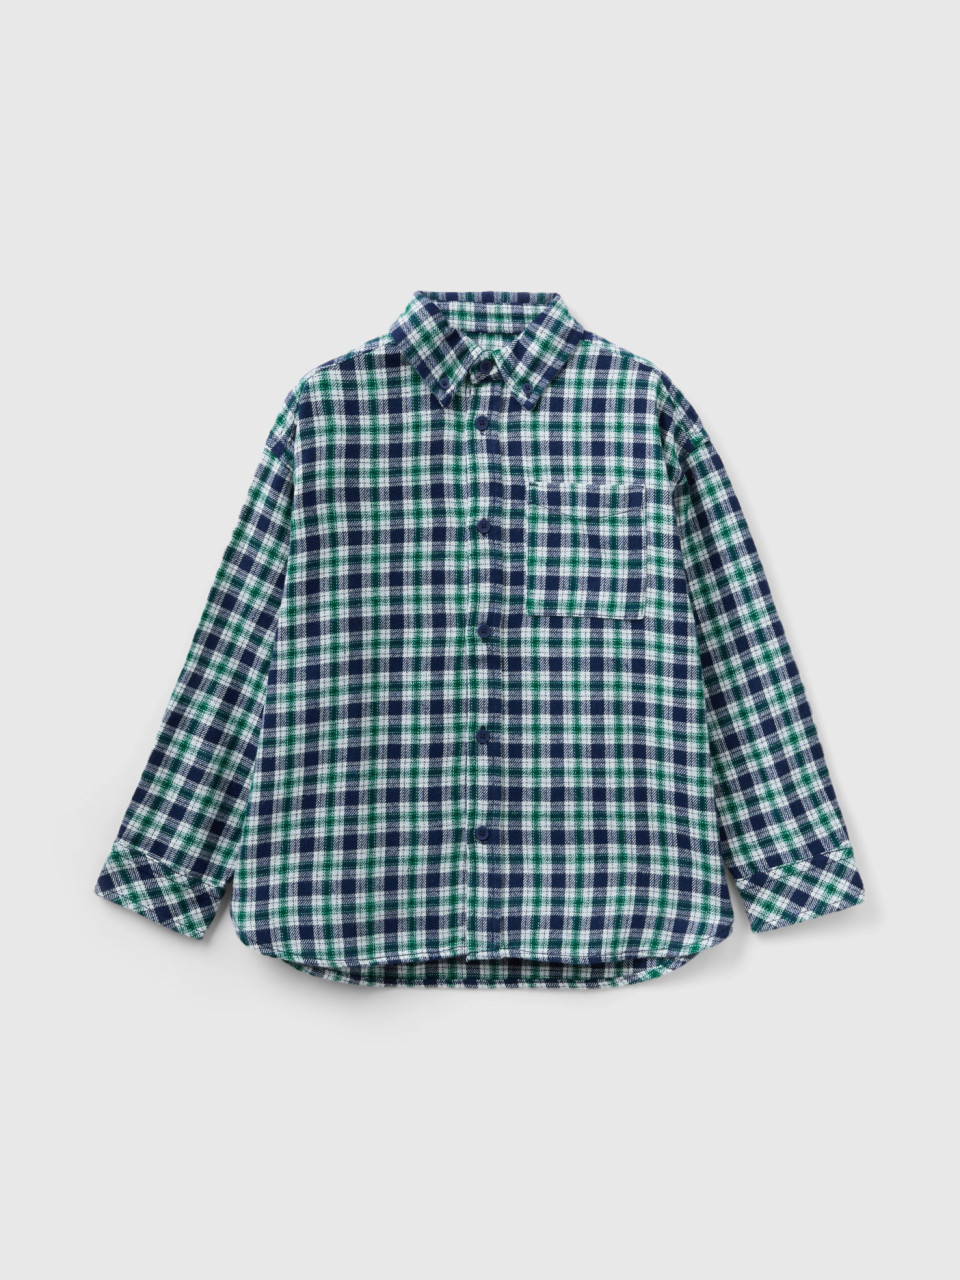 Benetton, Check Flannel Shirt, Multi-color, Kids